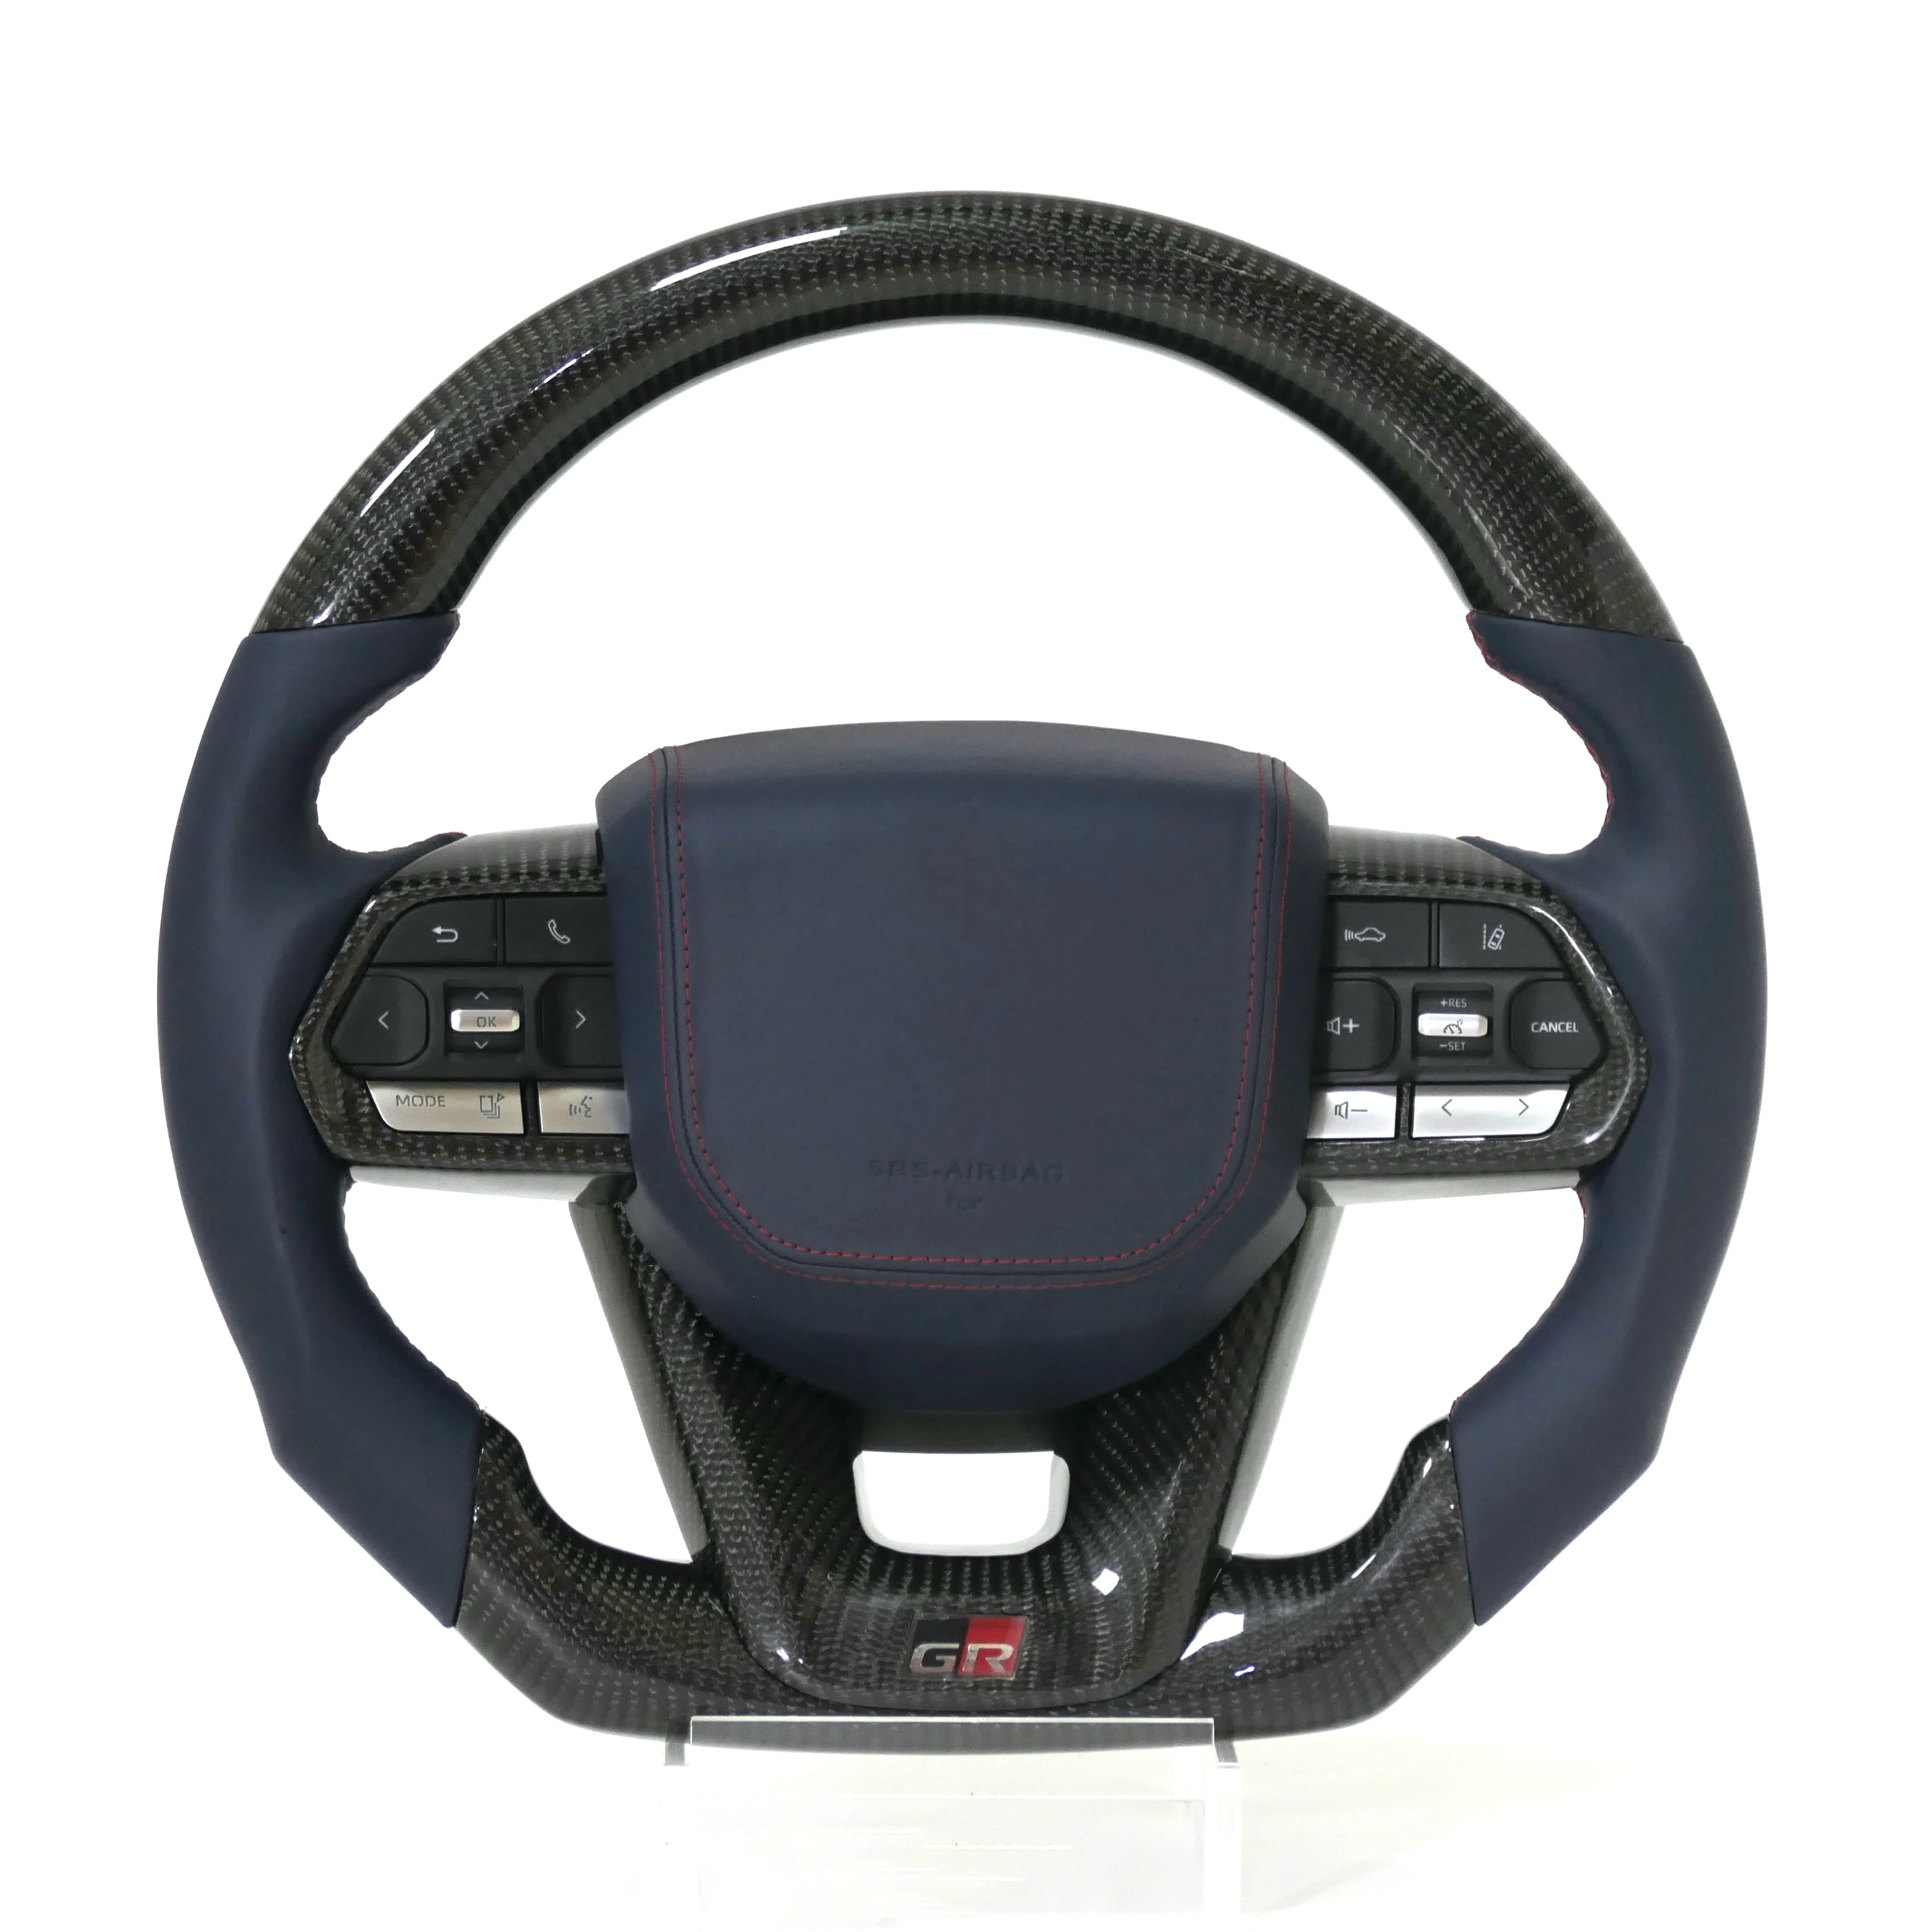 

Custom LC300 carbon fiber car steering wheel to fit Toyota Land Cruiser lc100 lc200 Prado fj70 fj79 fj76 LC200 FJ200 GR style